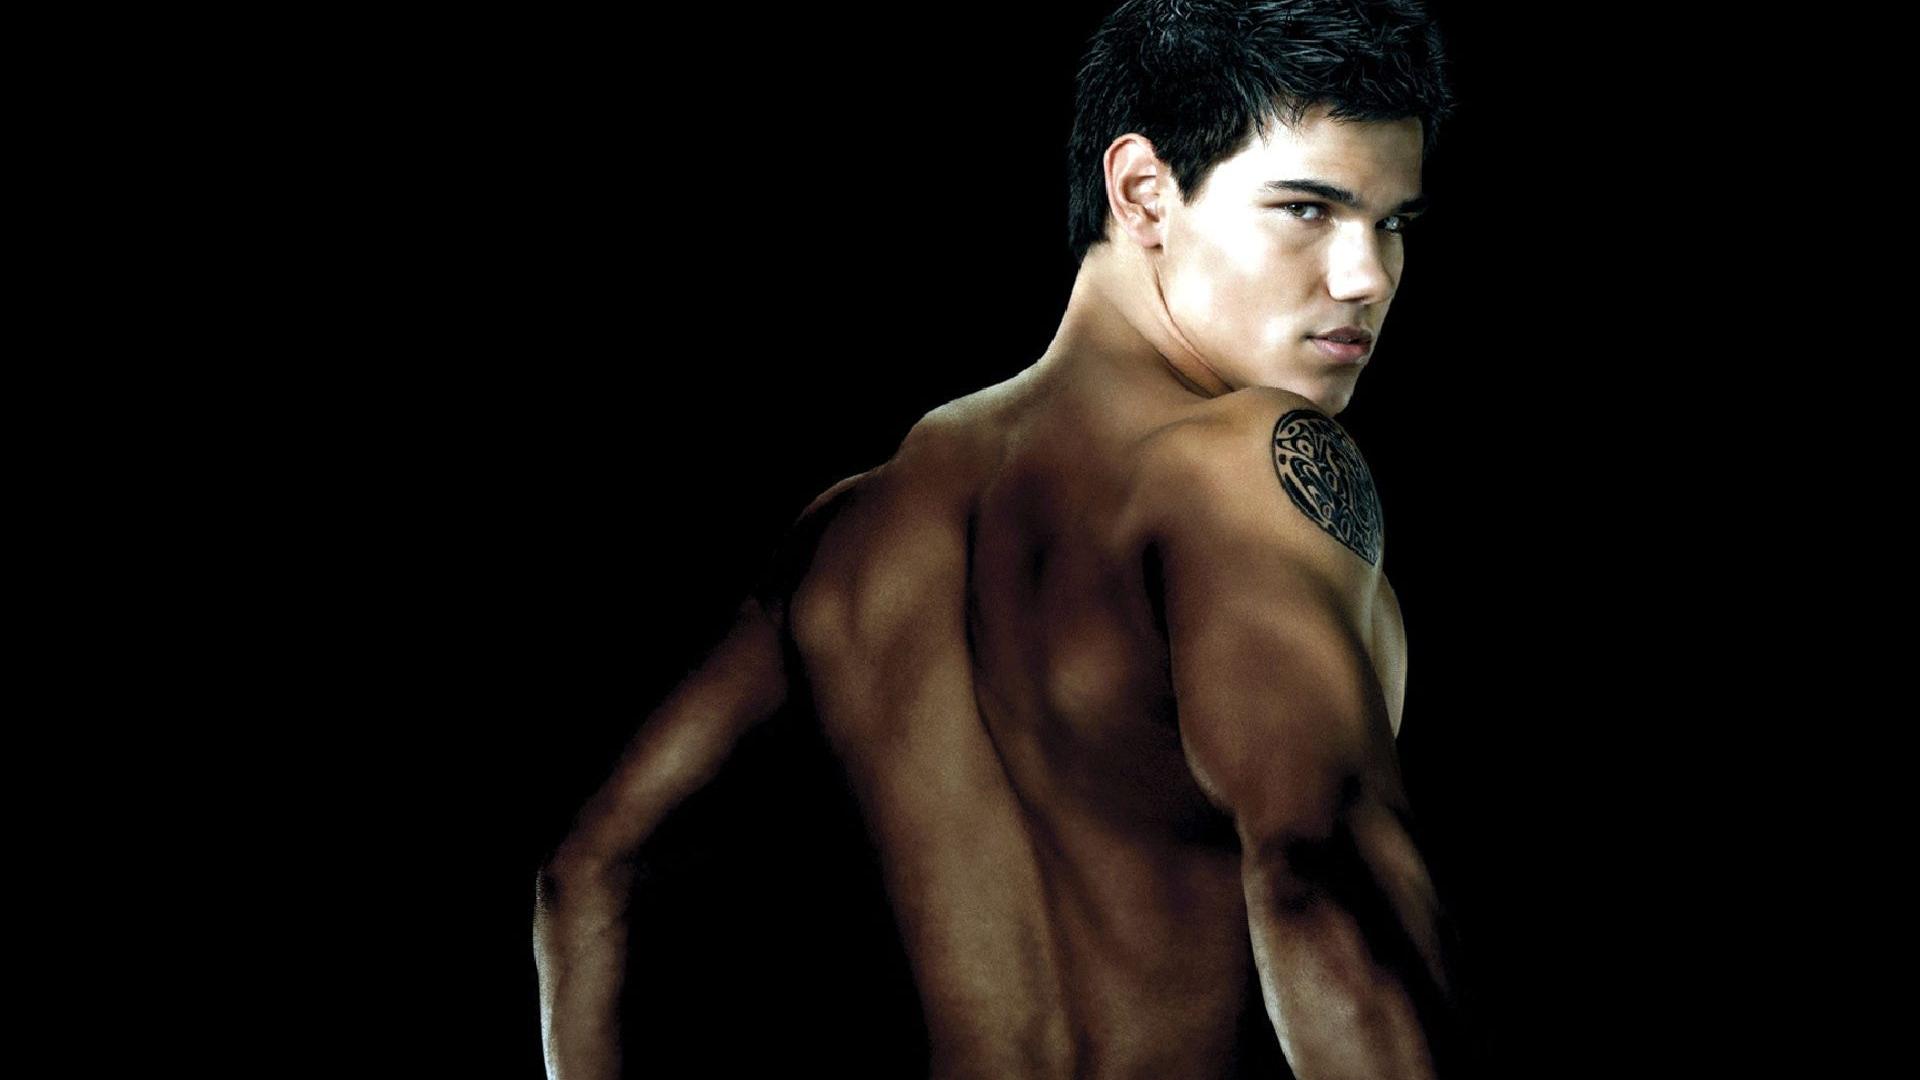 Taylor Lautner Shirtless Wallpaper Desktop Image & Picture